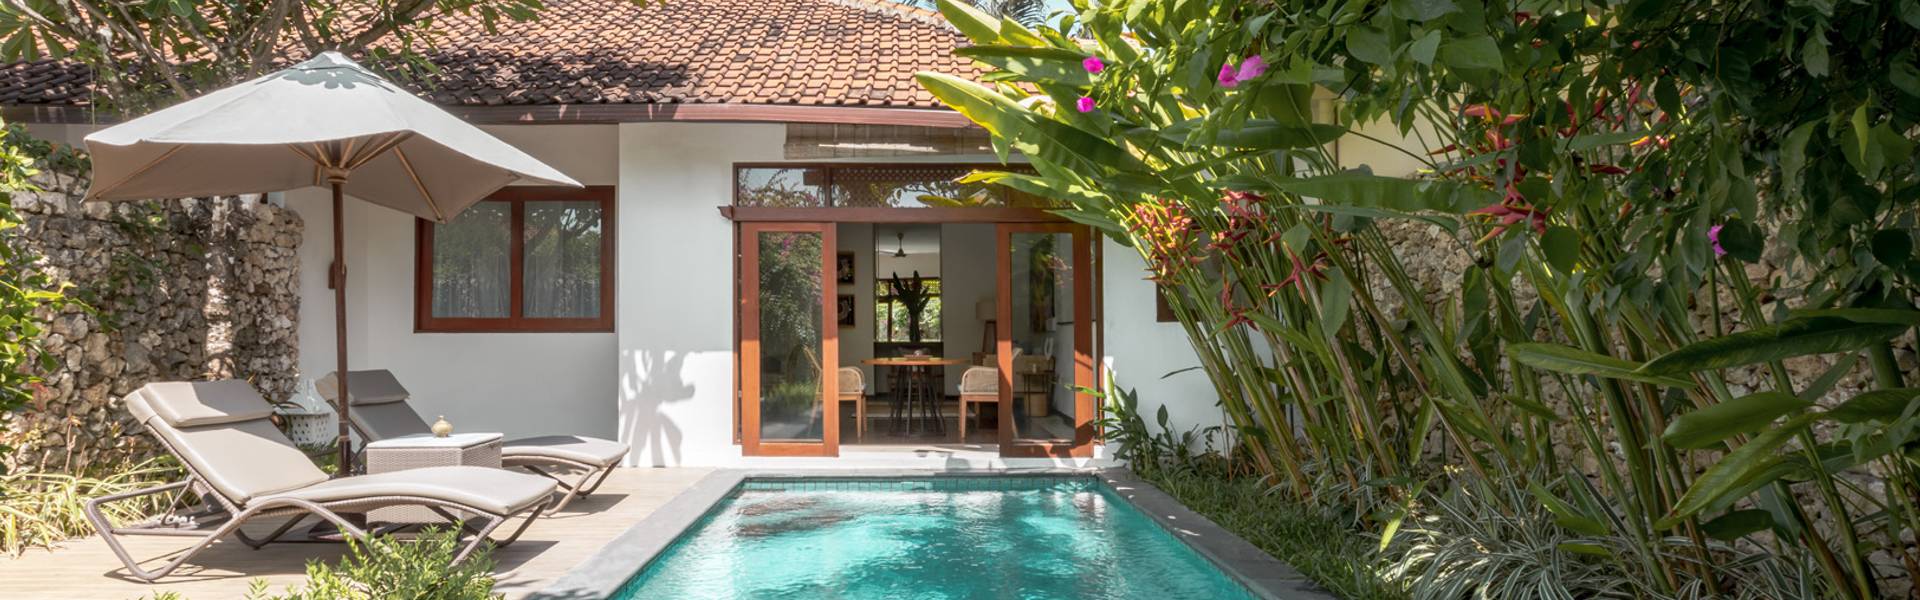 The Pavilions Bali One-bedroom Pool Villa